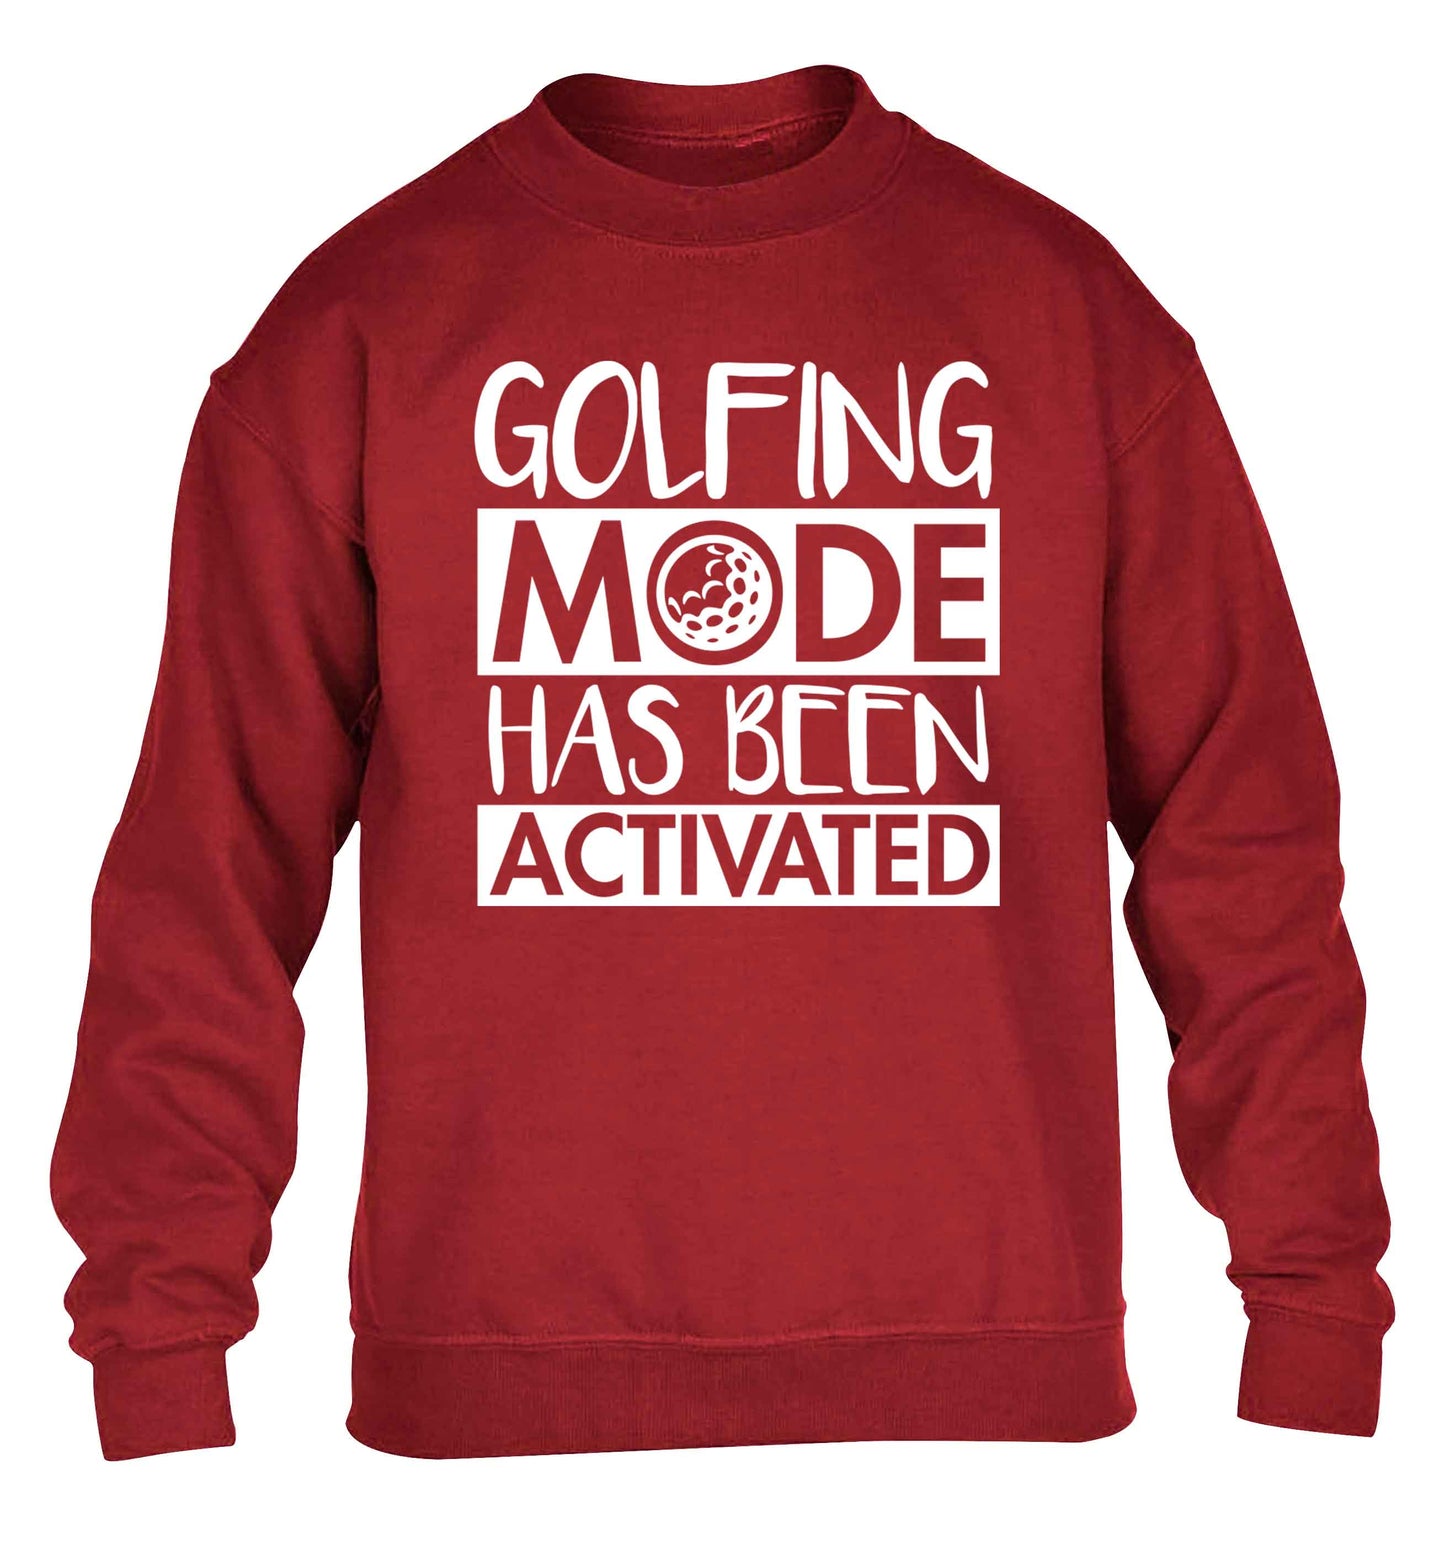 Golfing mode has been activated children's grey sweater 12-13 Years